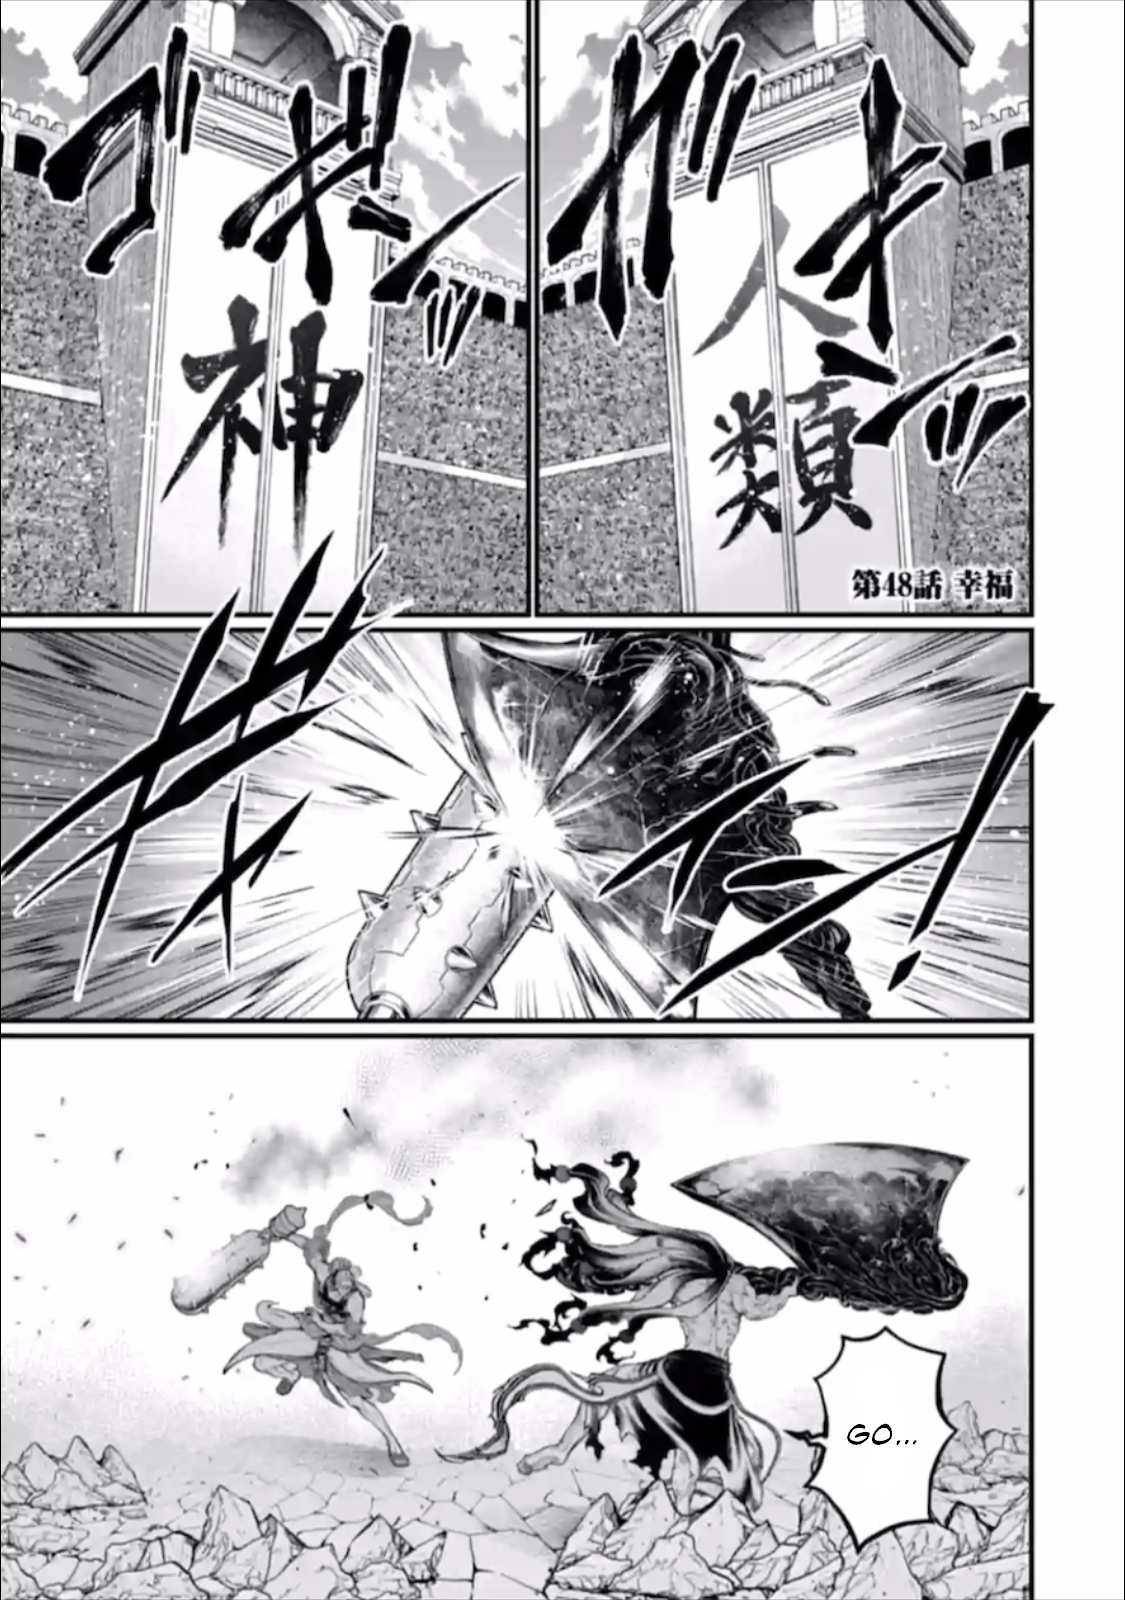 Record of Ragnarok: Shuumatsu no Valkyrie Chapter 74 Release Date